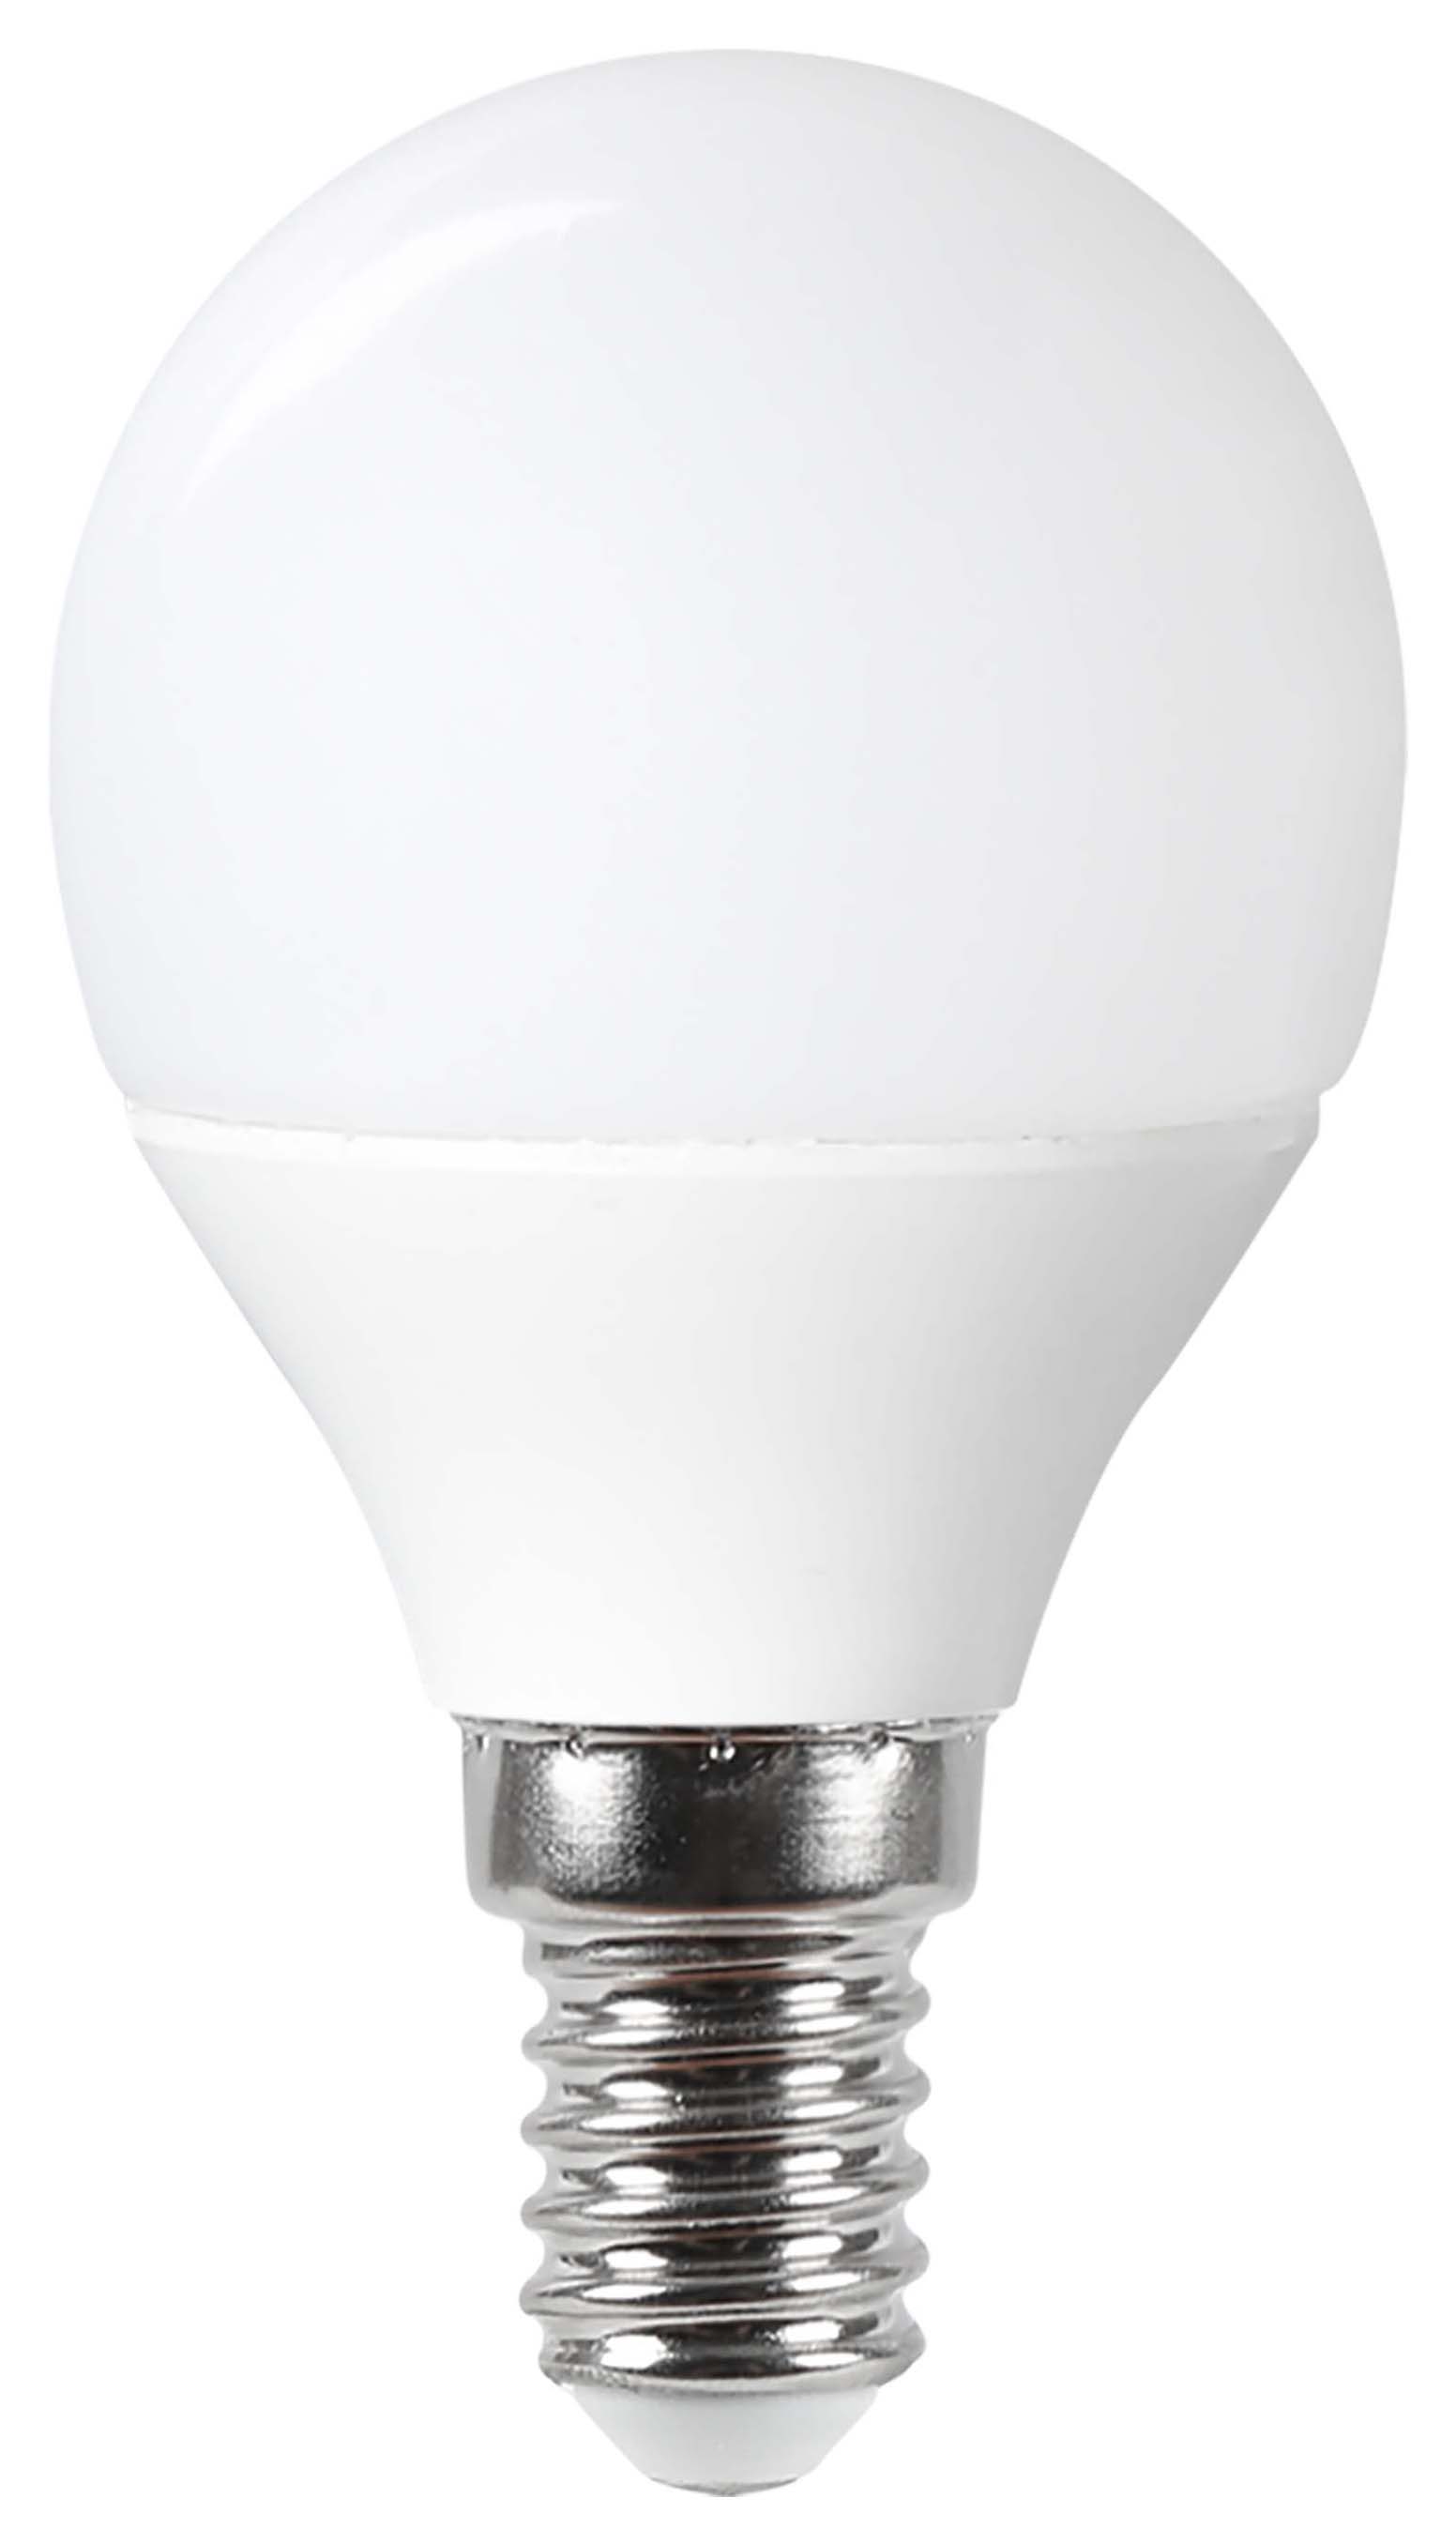 Classic Mini LED Lamp ULKE E14 4W Warm White mini lamp WW, Strühm